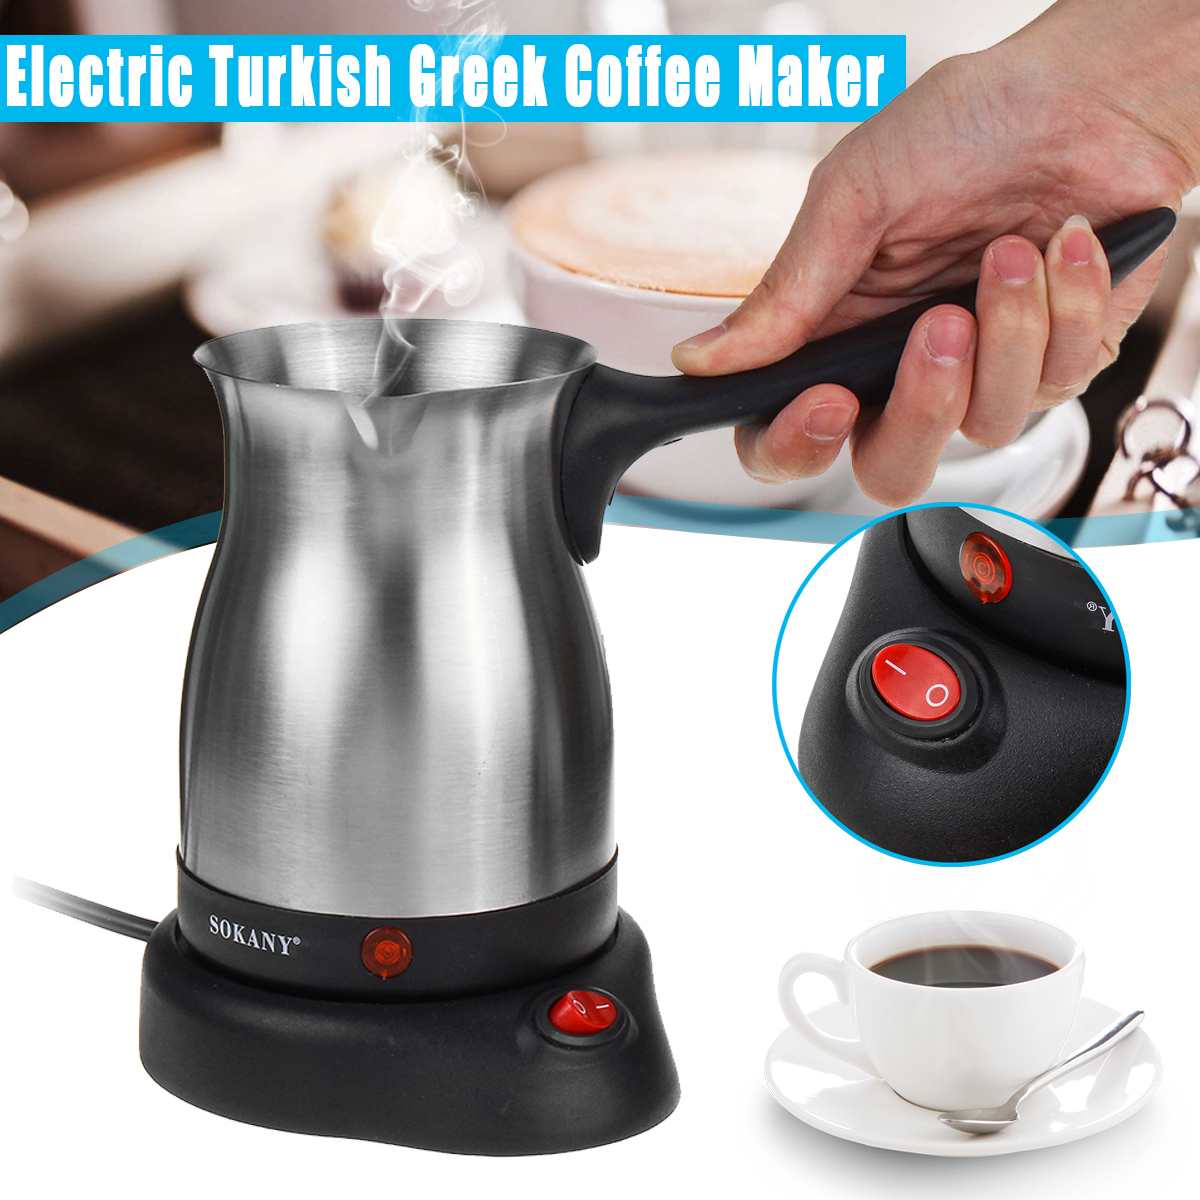 Stainless Steel Electric Turkish Greek Coffee Maker 220V-240V 800W Machine Espresso Moka Pot Waterproof IPX4 Mulfunctional